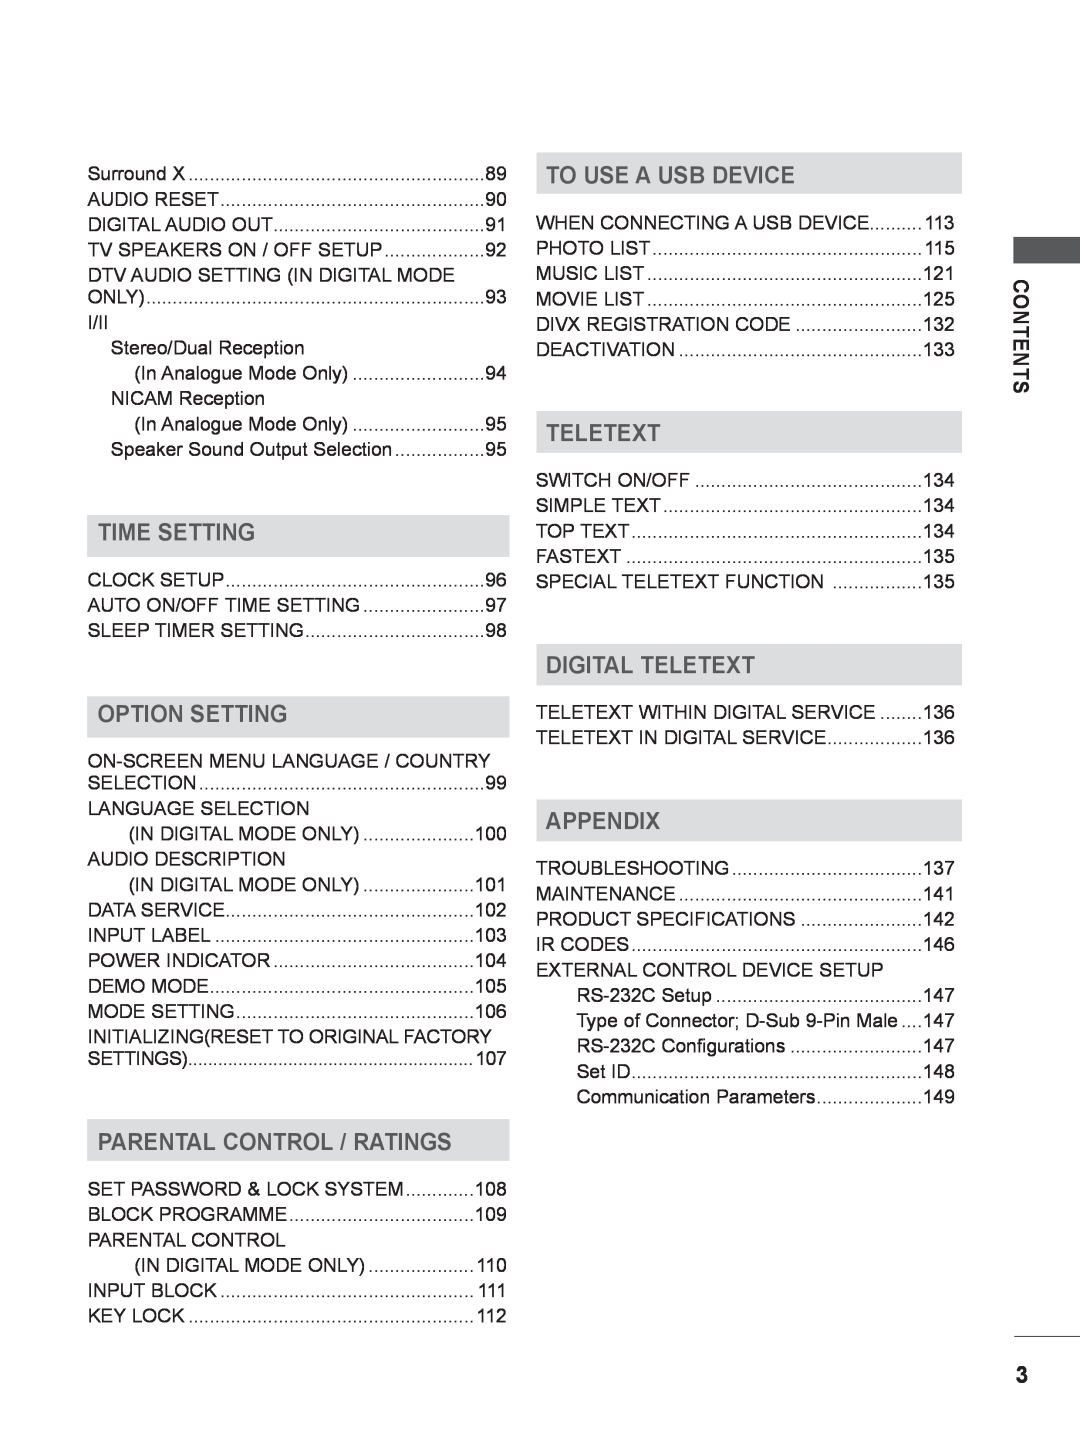 LG Electronics M2380DB Time Setting, Option Setting, Parental Control / Ratings, To Use A Usb Device, Teletext, Appendix 